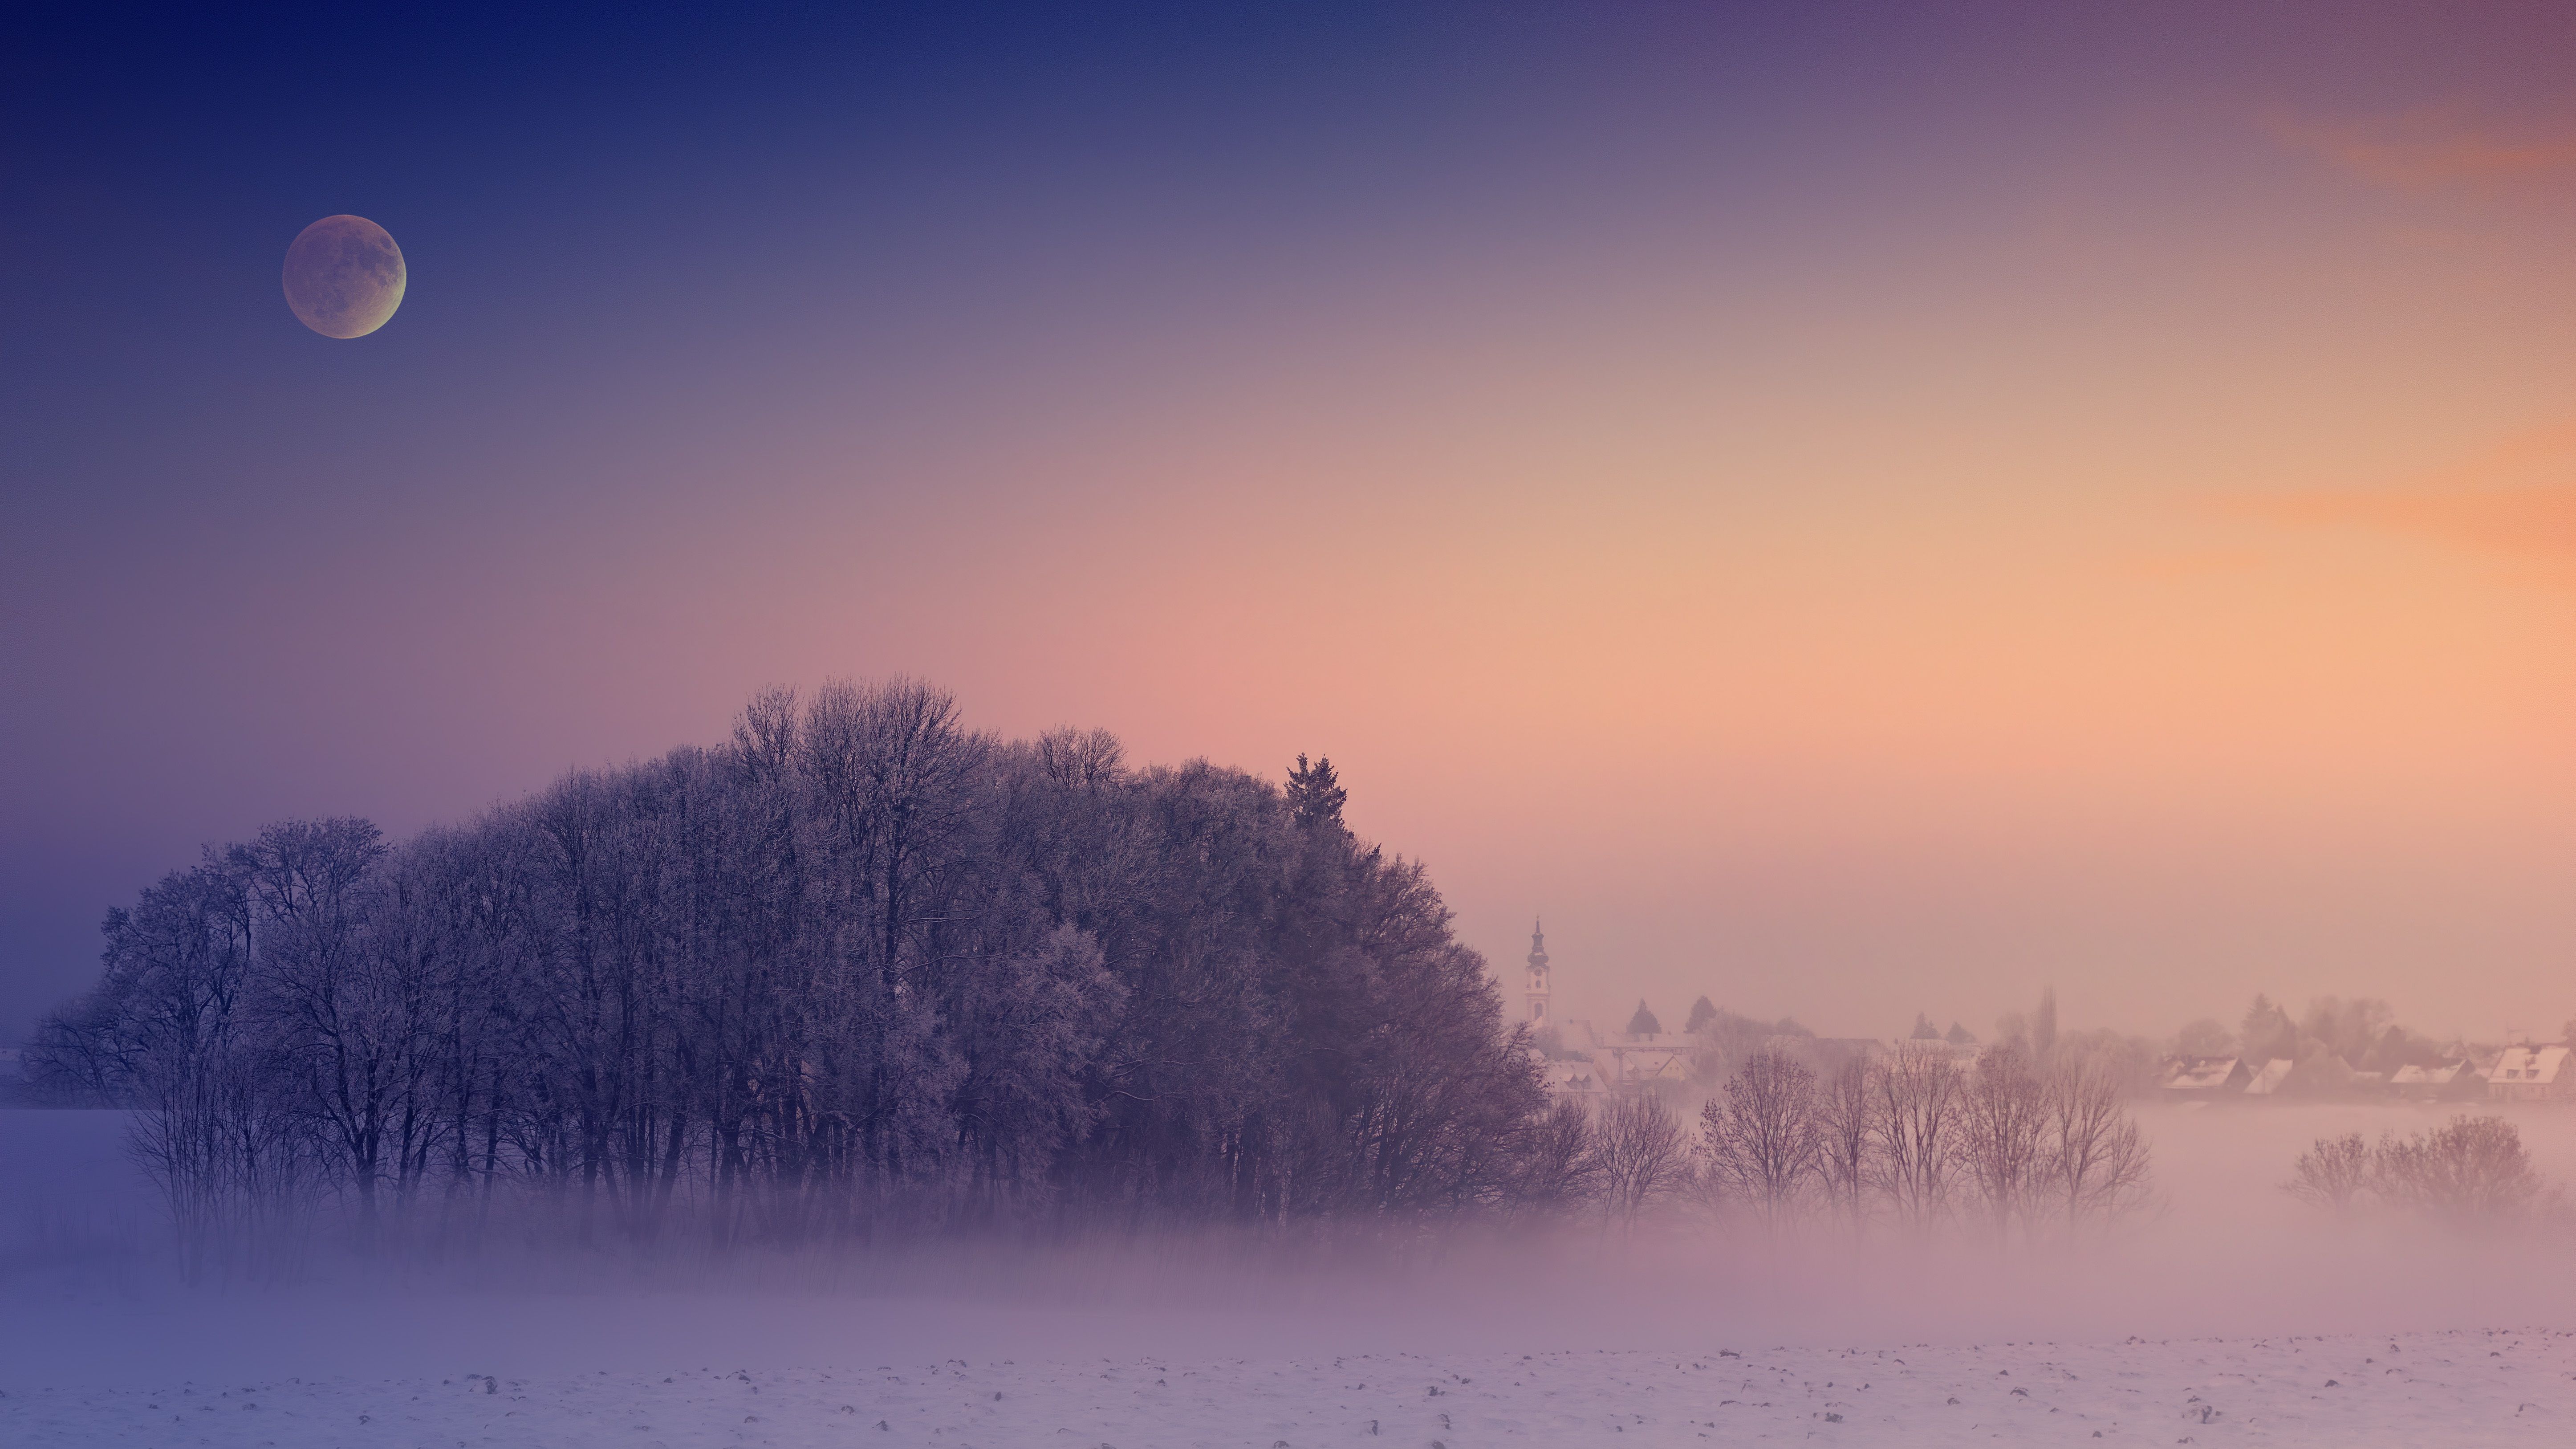 Winter 4K Wallpaper, Morning, Foggy, Moon, Landscape, Cold, 5K, Nature